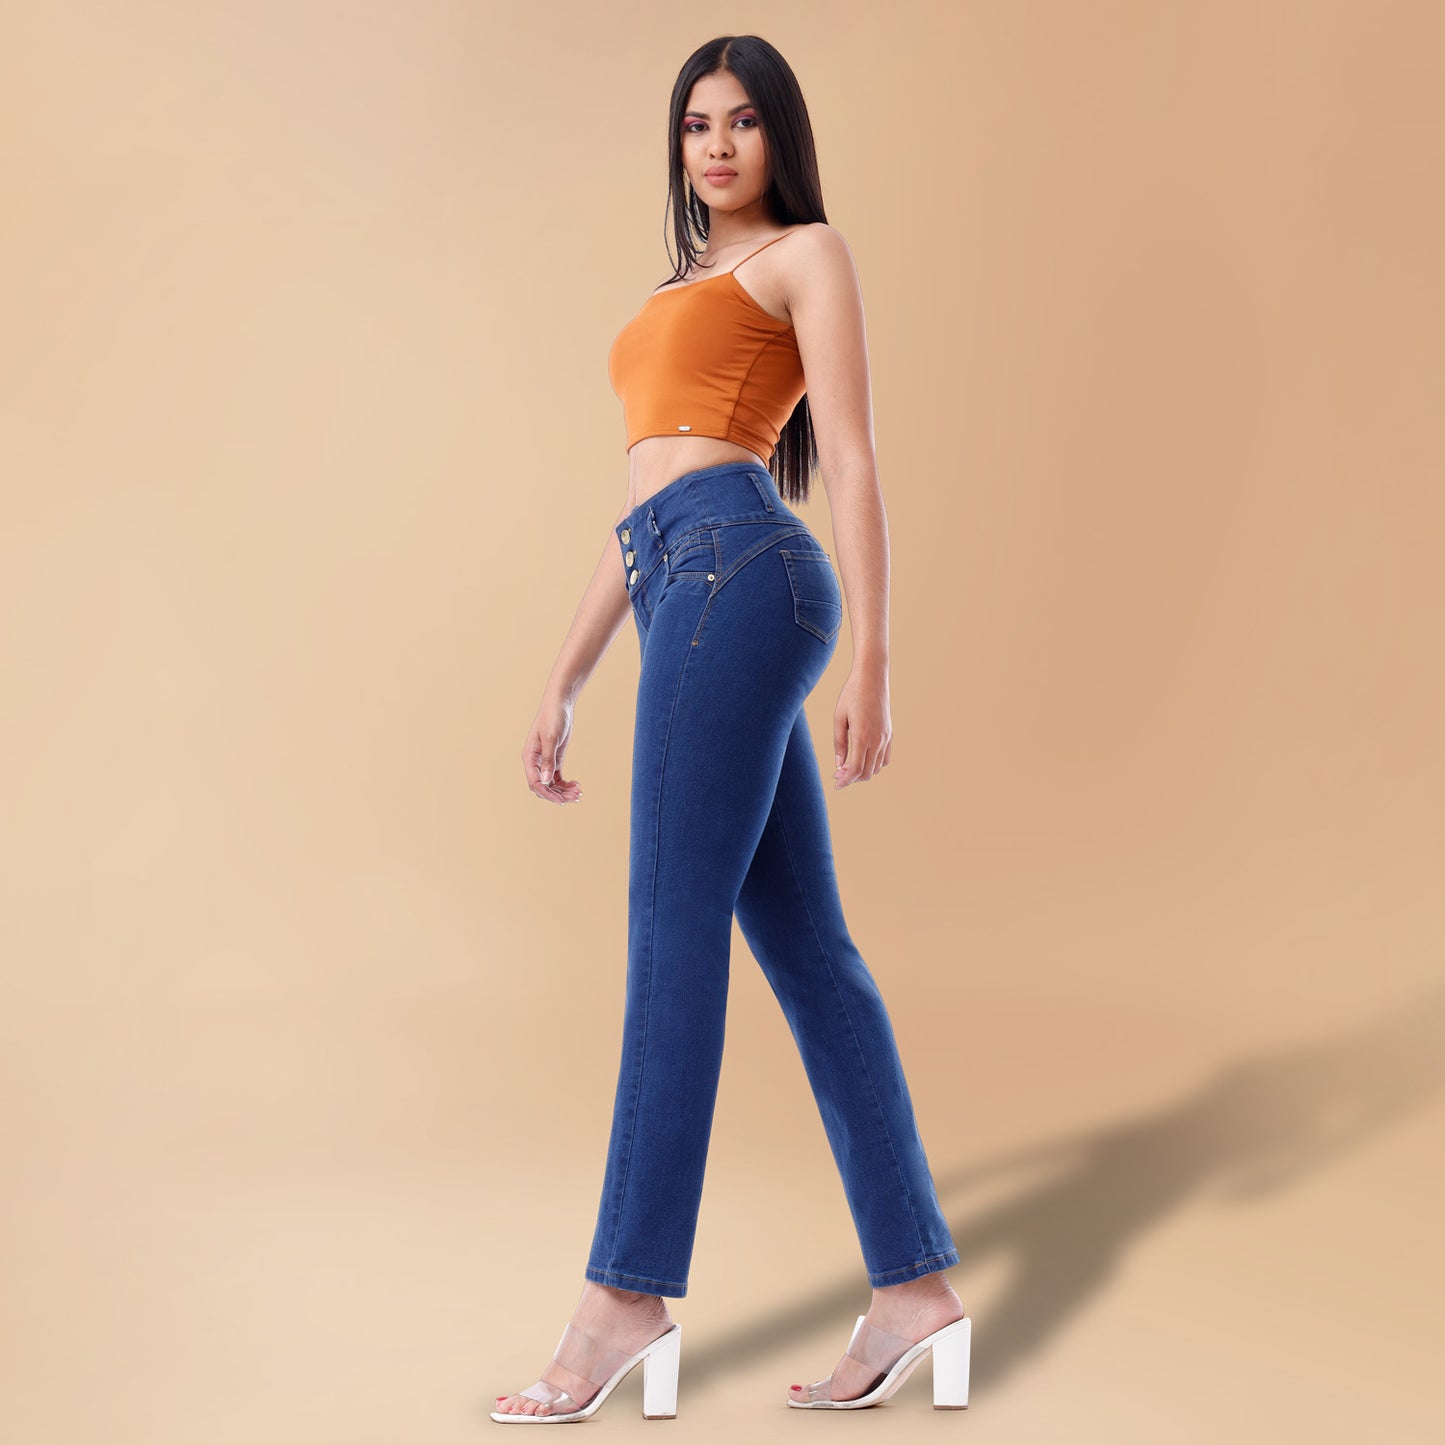 Jeans Push Up Mujer Semimoda Semi Recto Cintura Cristal – 220663